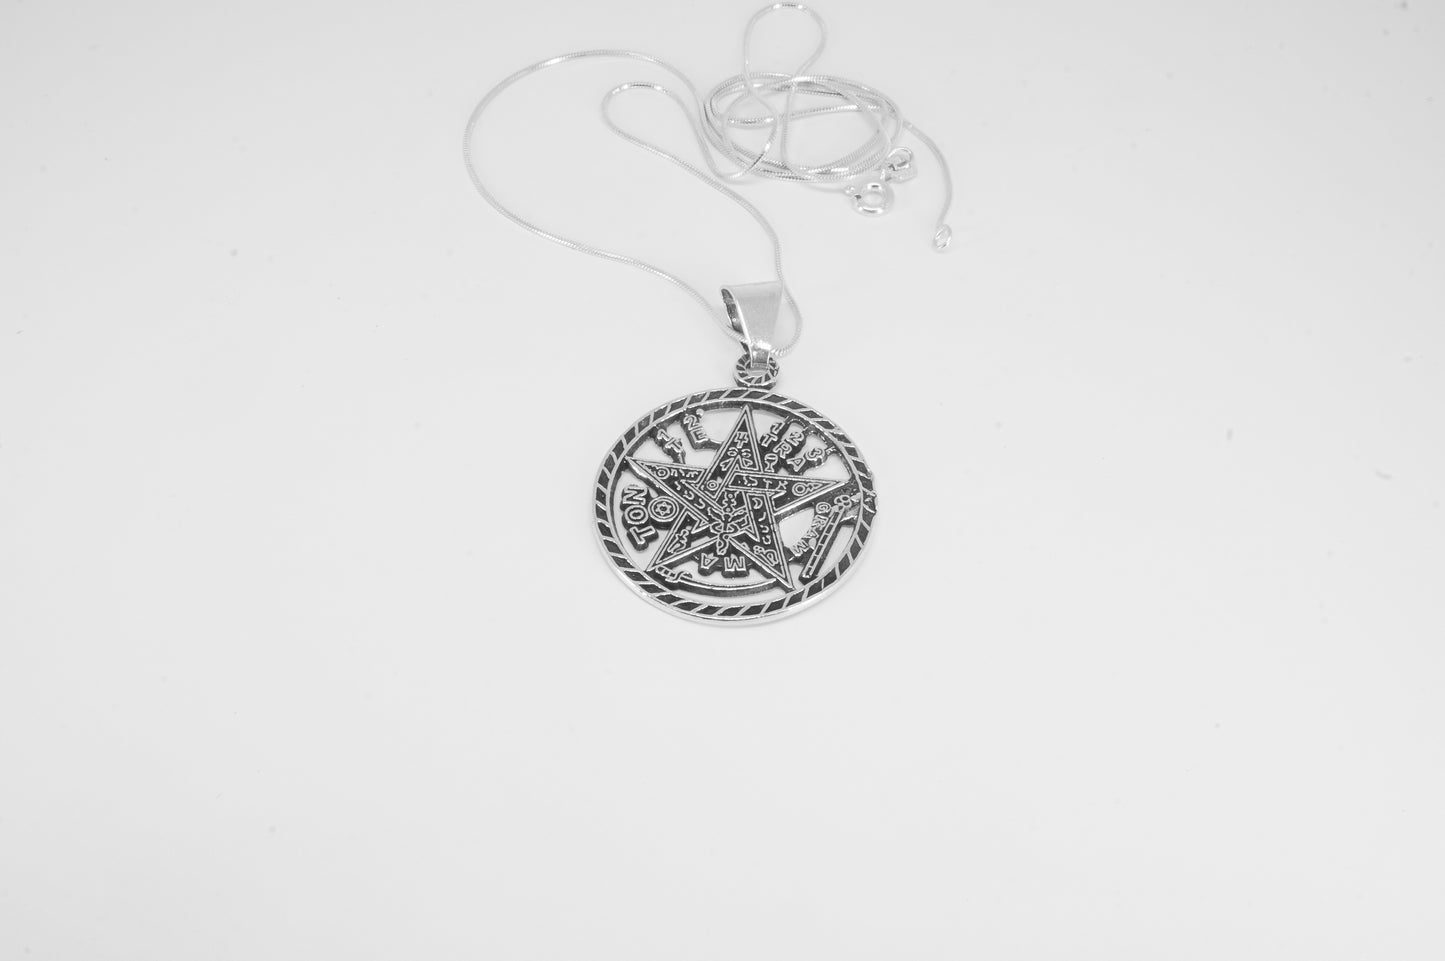 Dije de plata solida 925 Tetragramatron calado con cadena de 48cms incluida